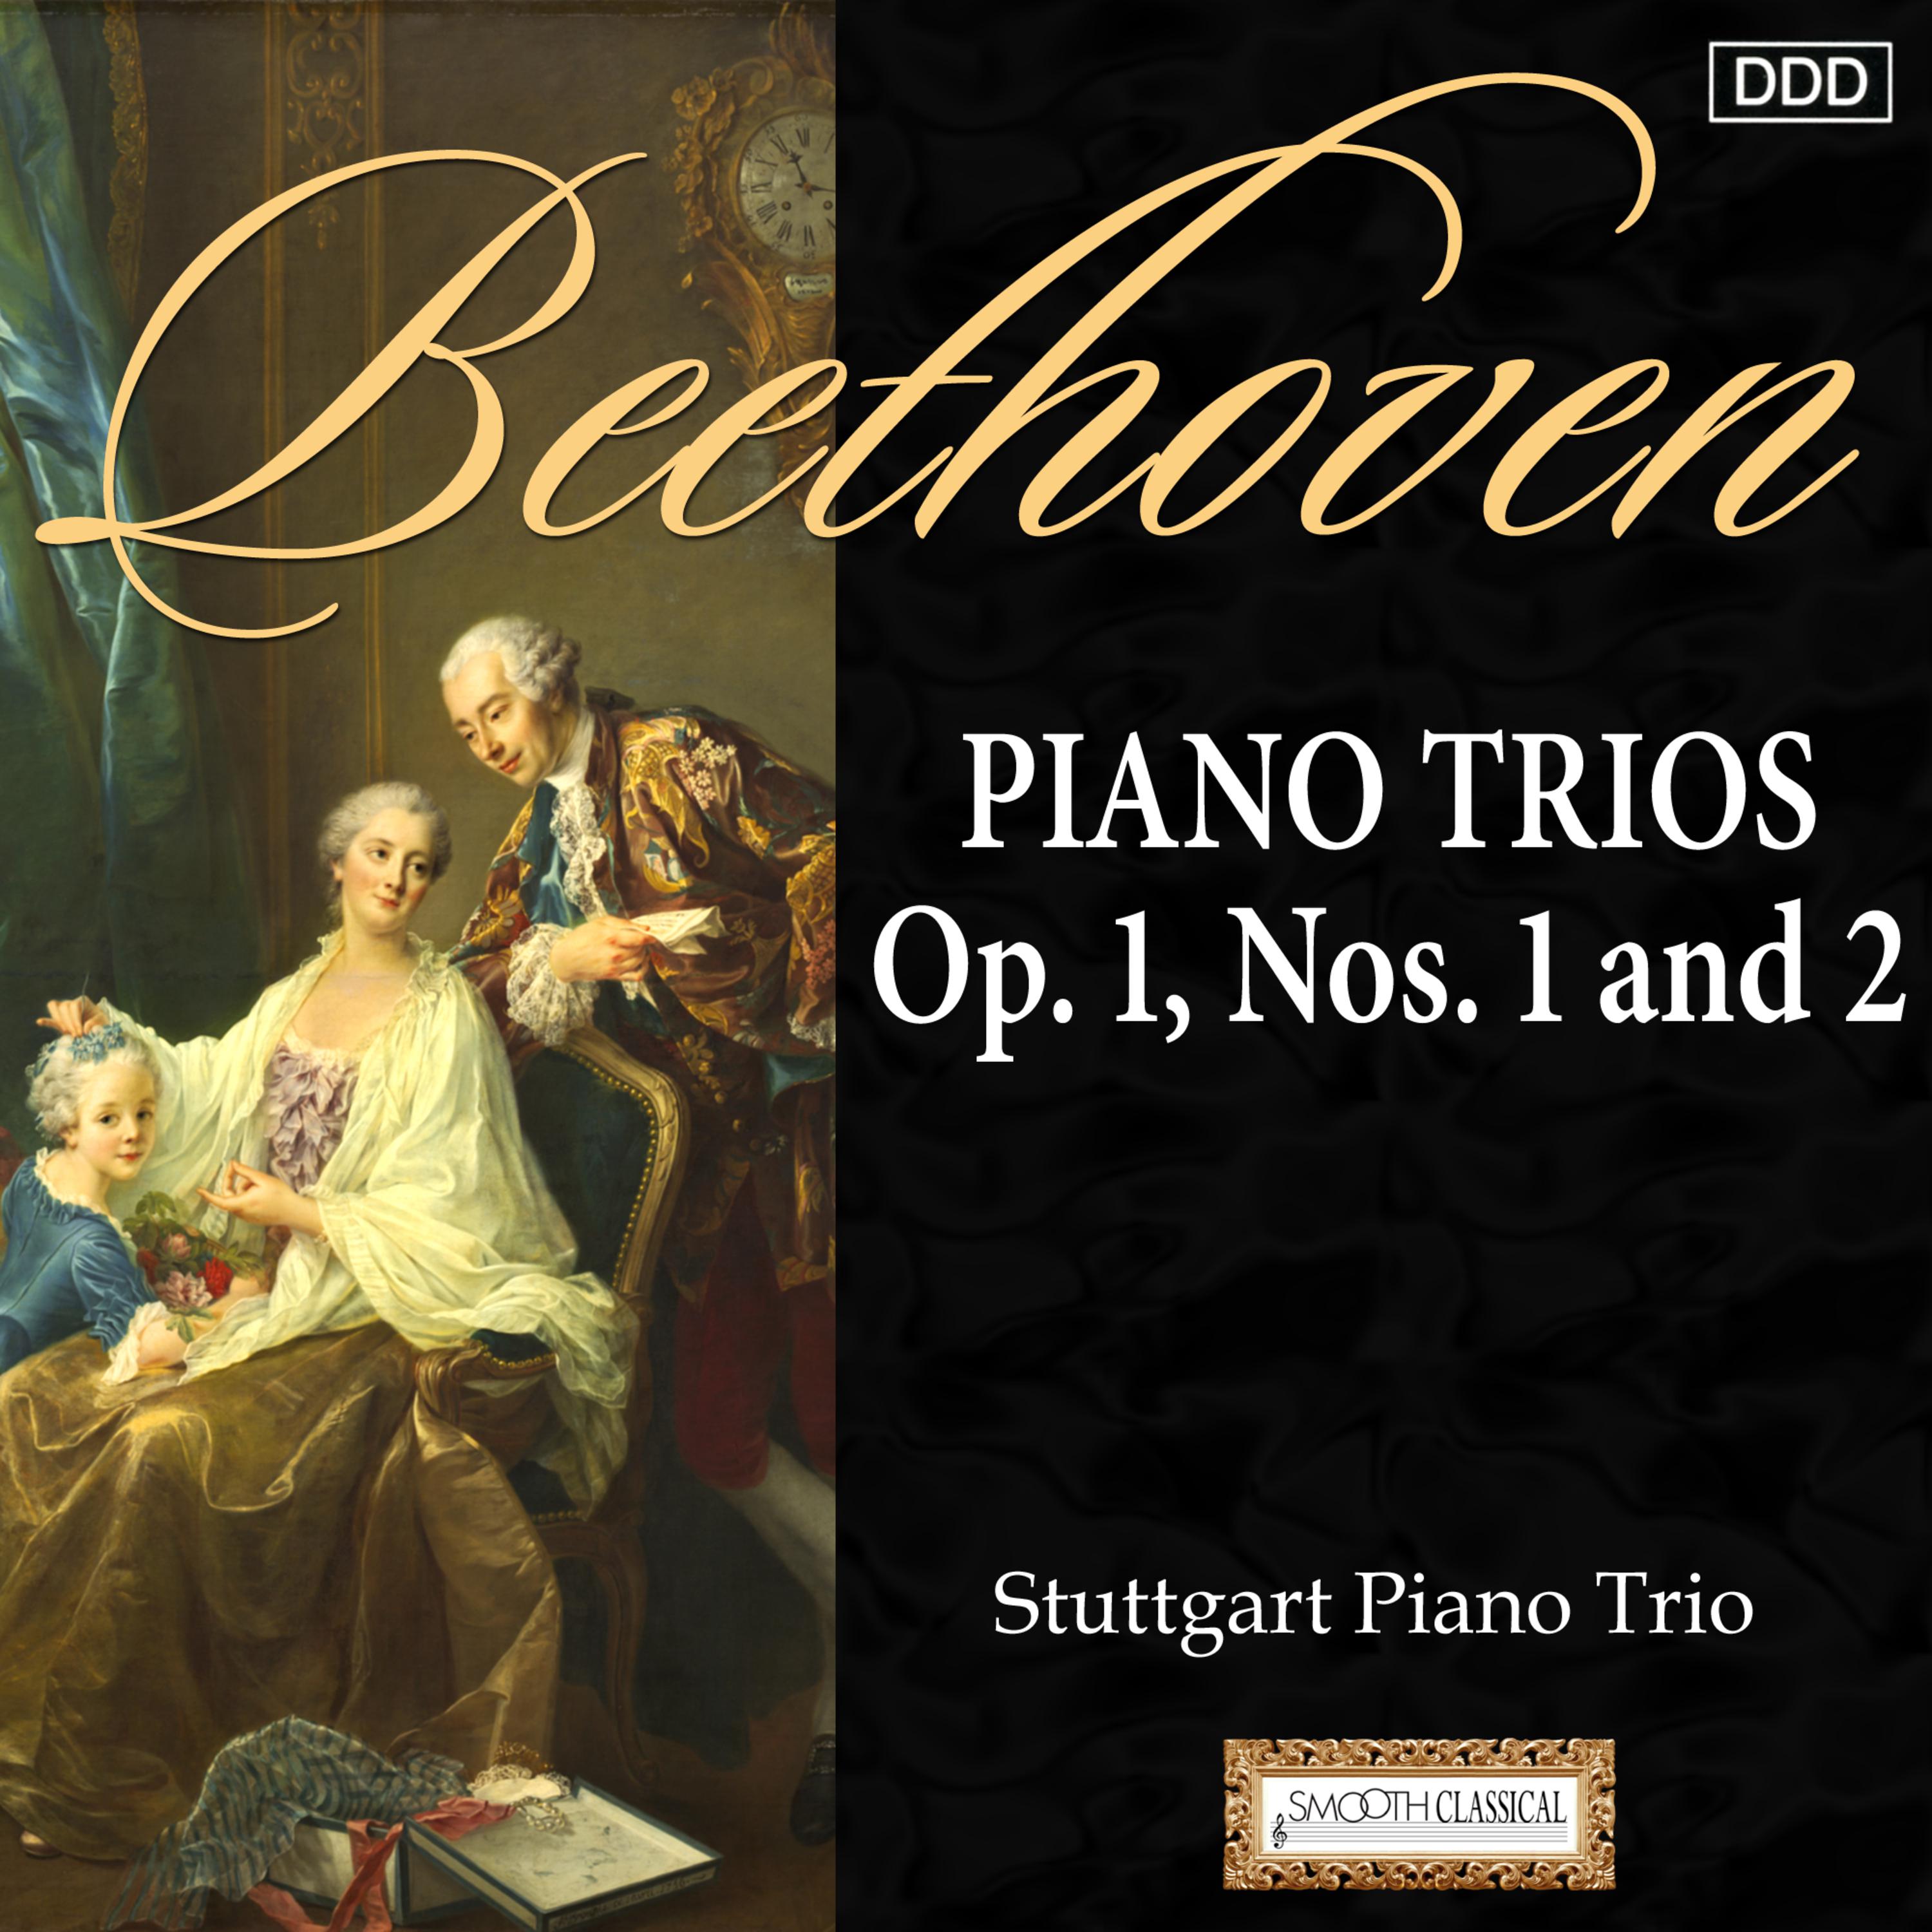 Piano Trio No. 1 in E-Flat Major, Op. 1 No. 1: III. Scherzo: Allegro assai